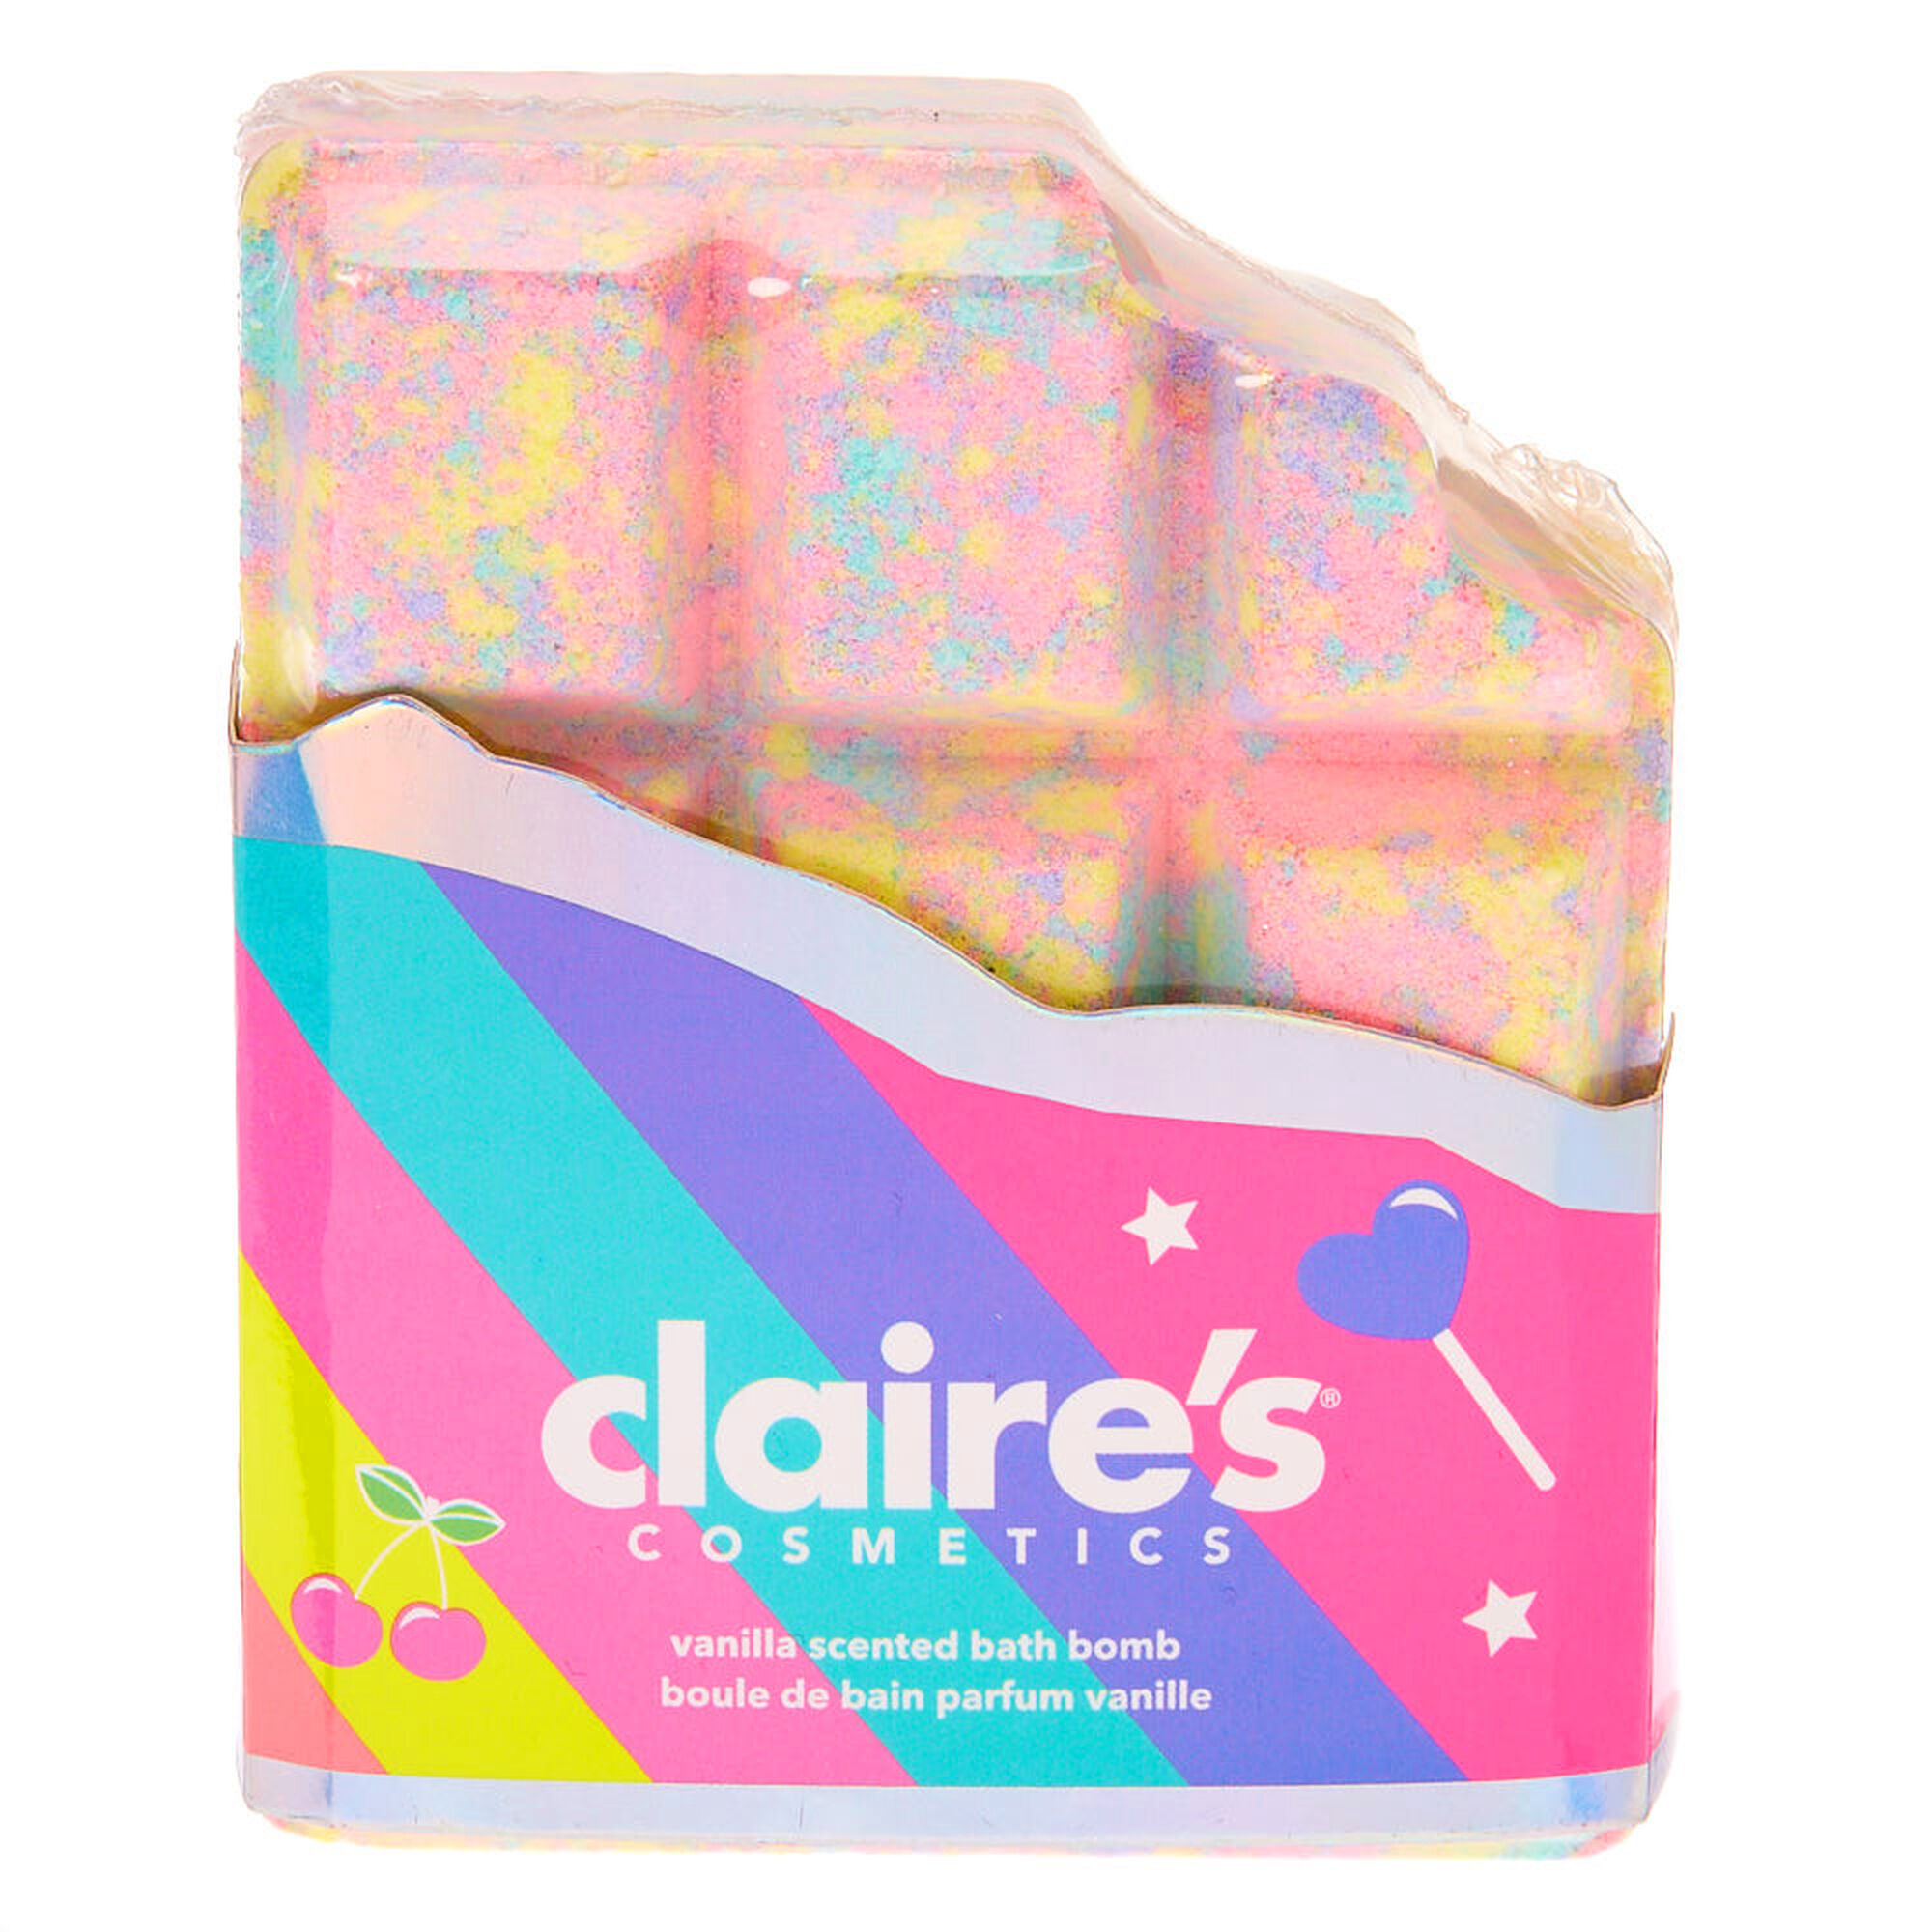 View Claires Chocolate Bar Bath Bomb Vanilla Rainbow information